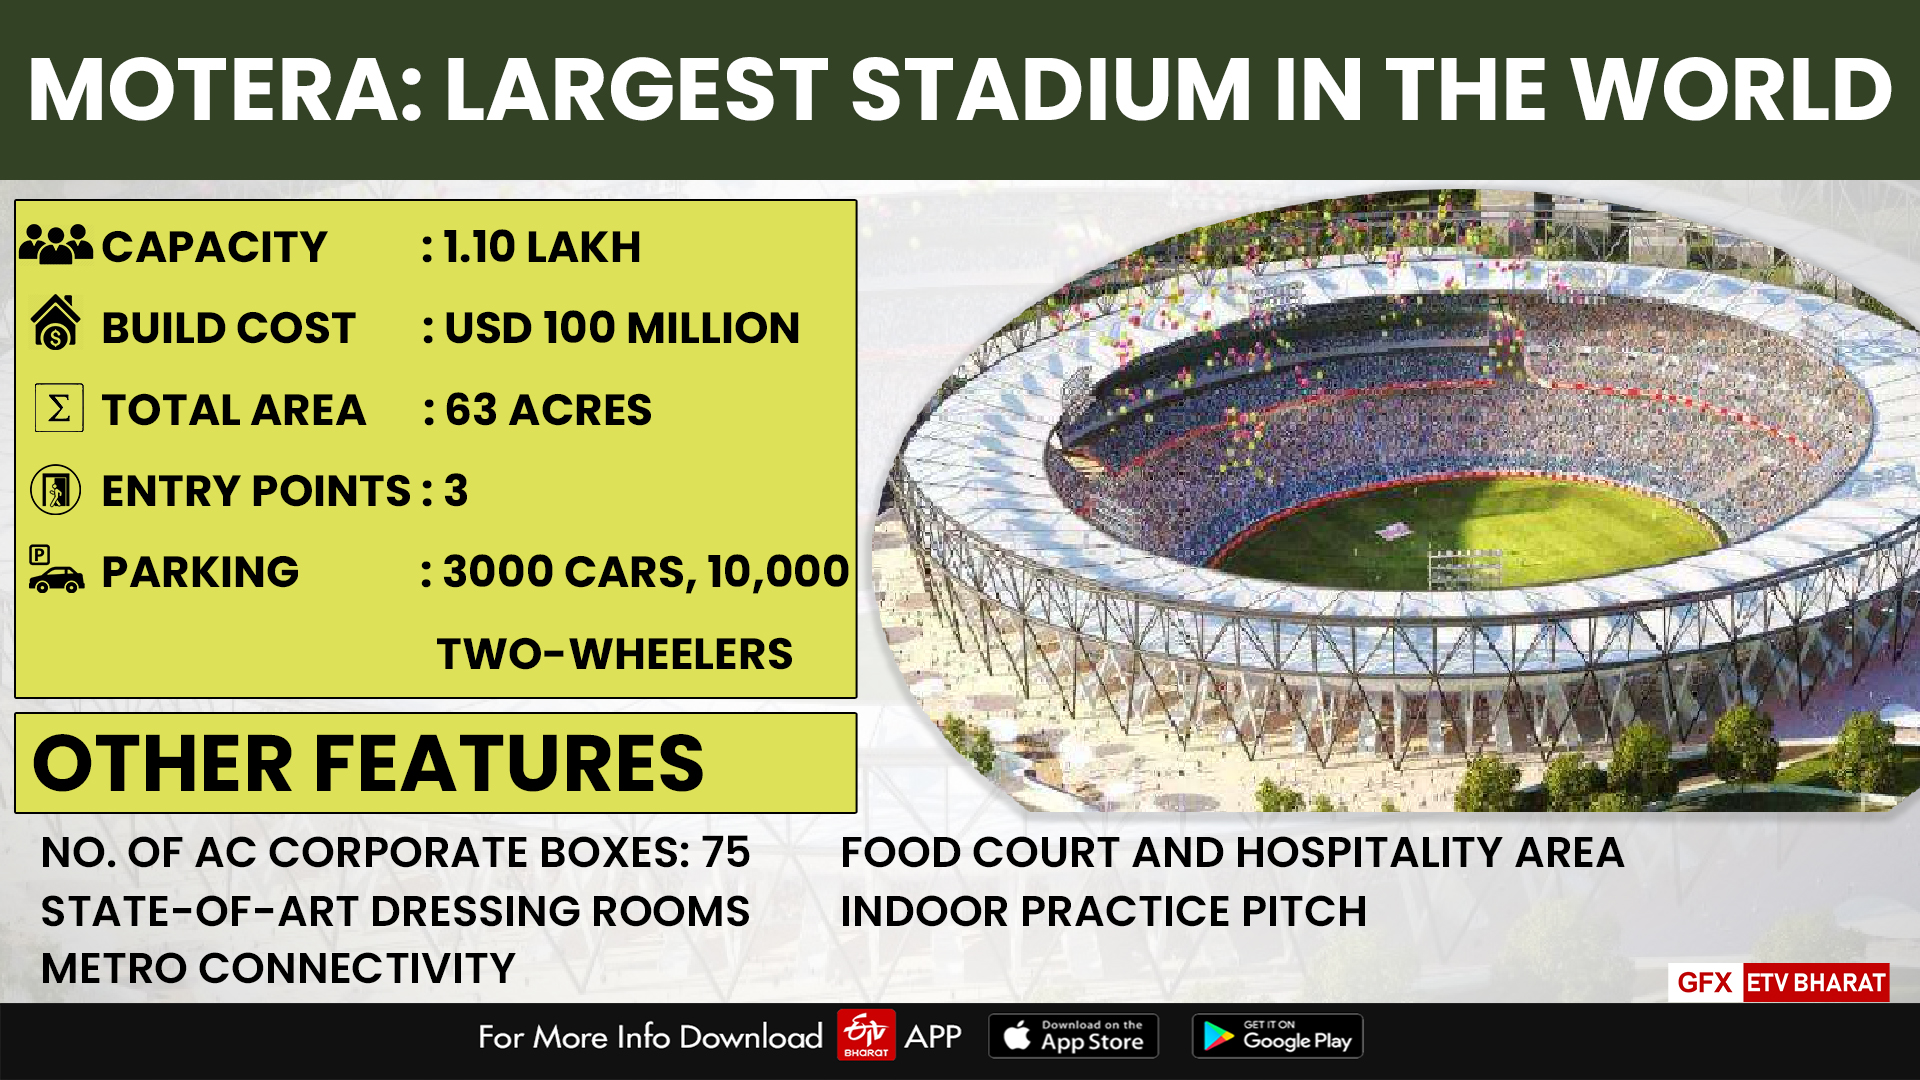 Interesting facts about Motera Stadium